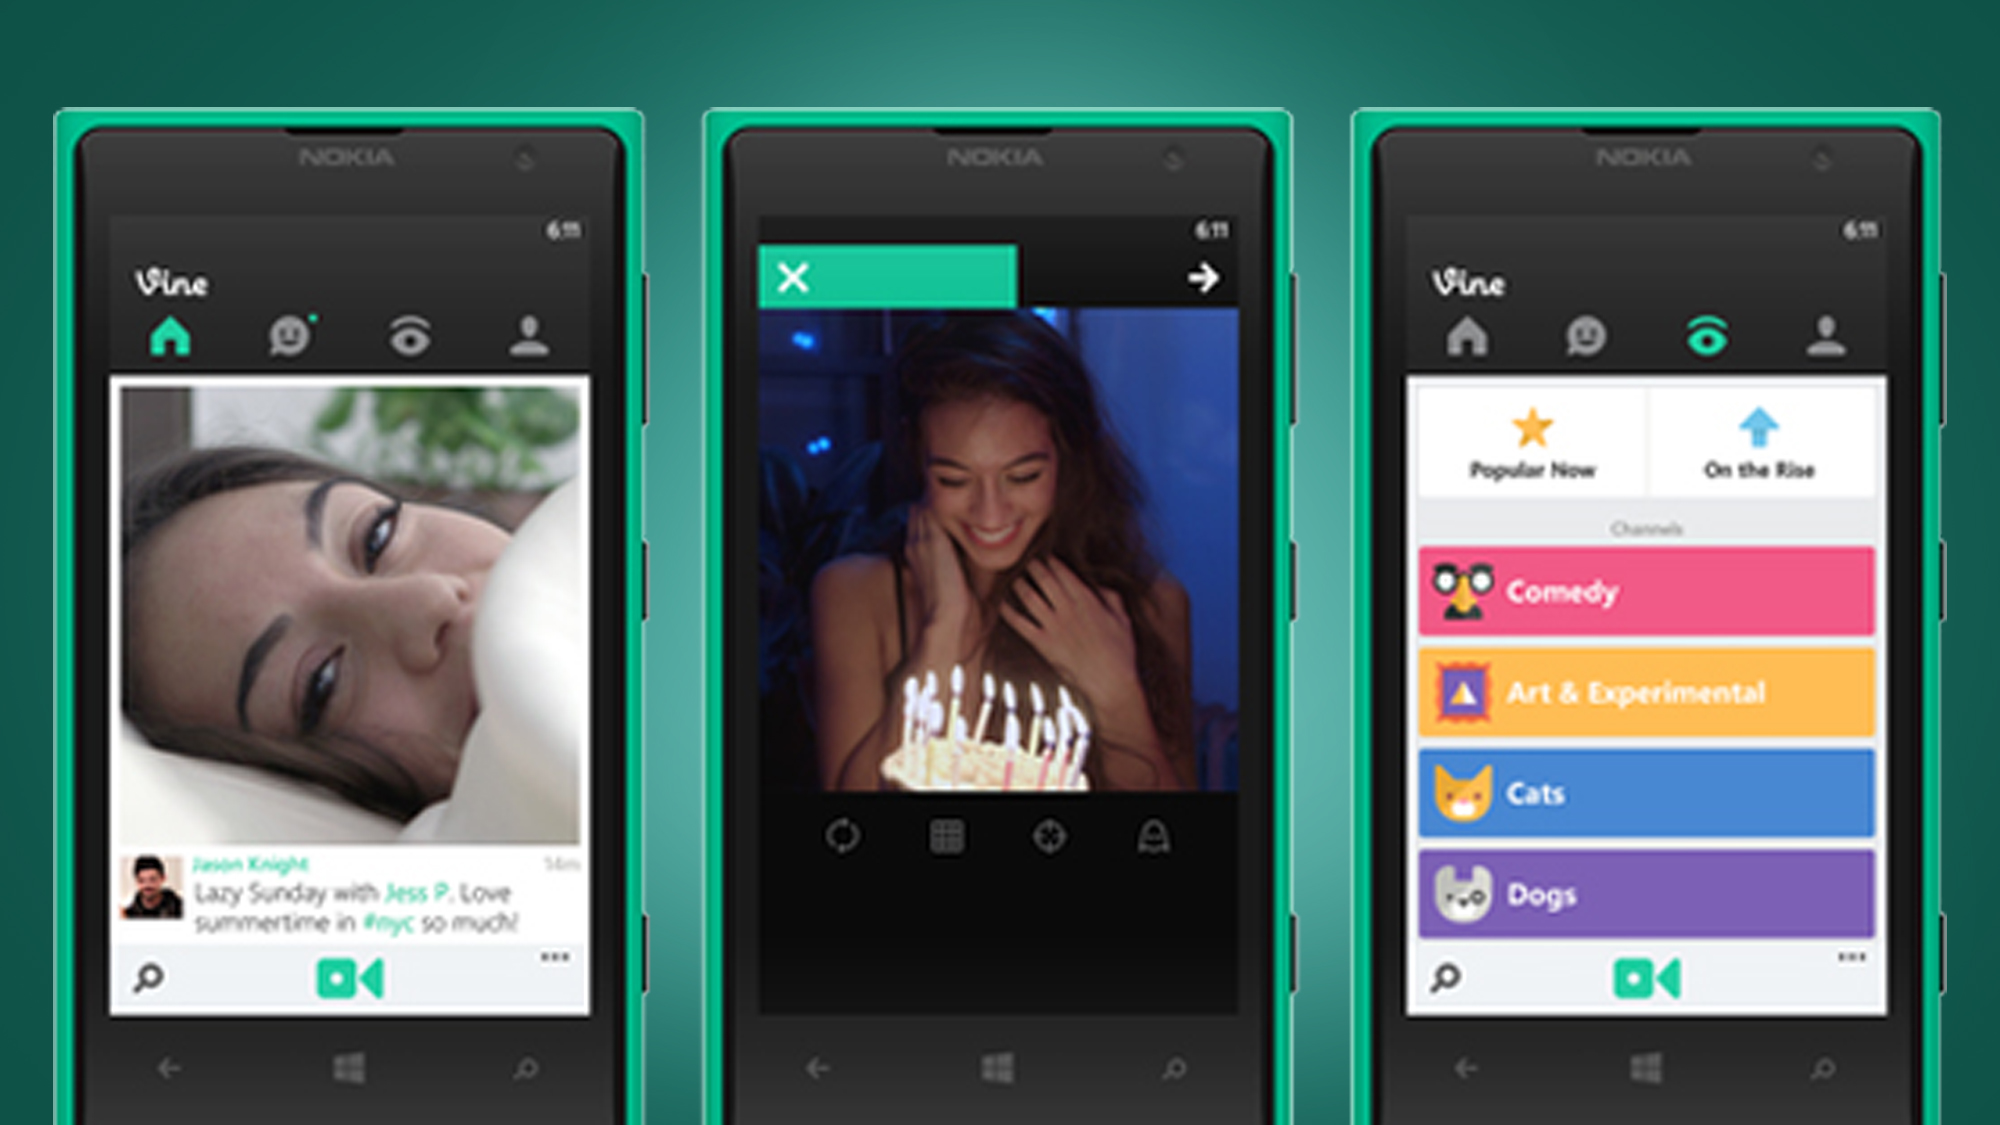 Three phones showing the Vine video sharing app